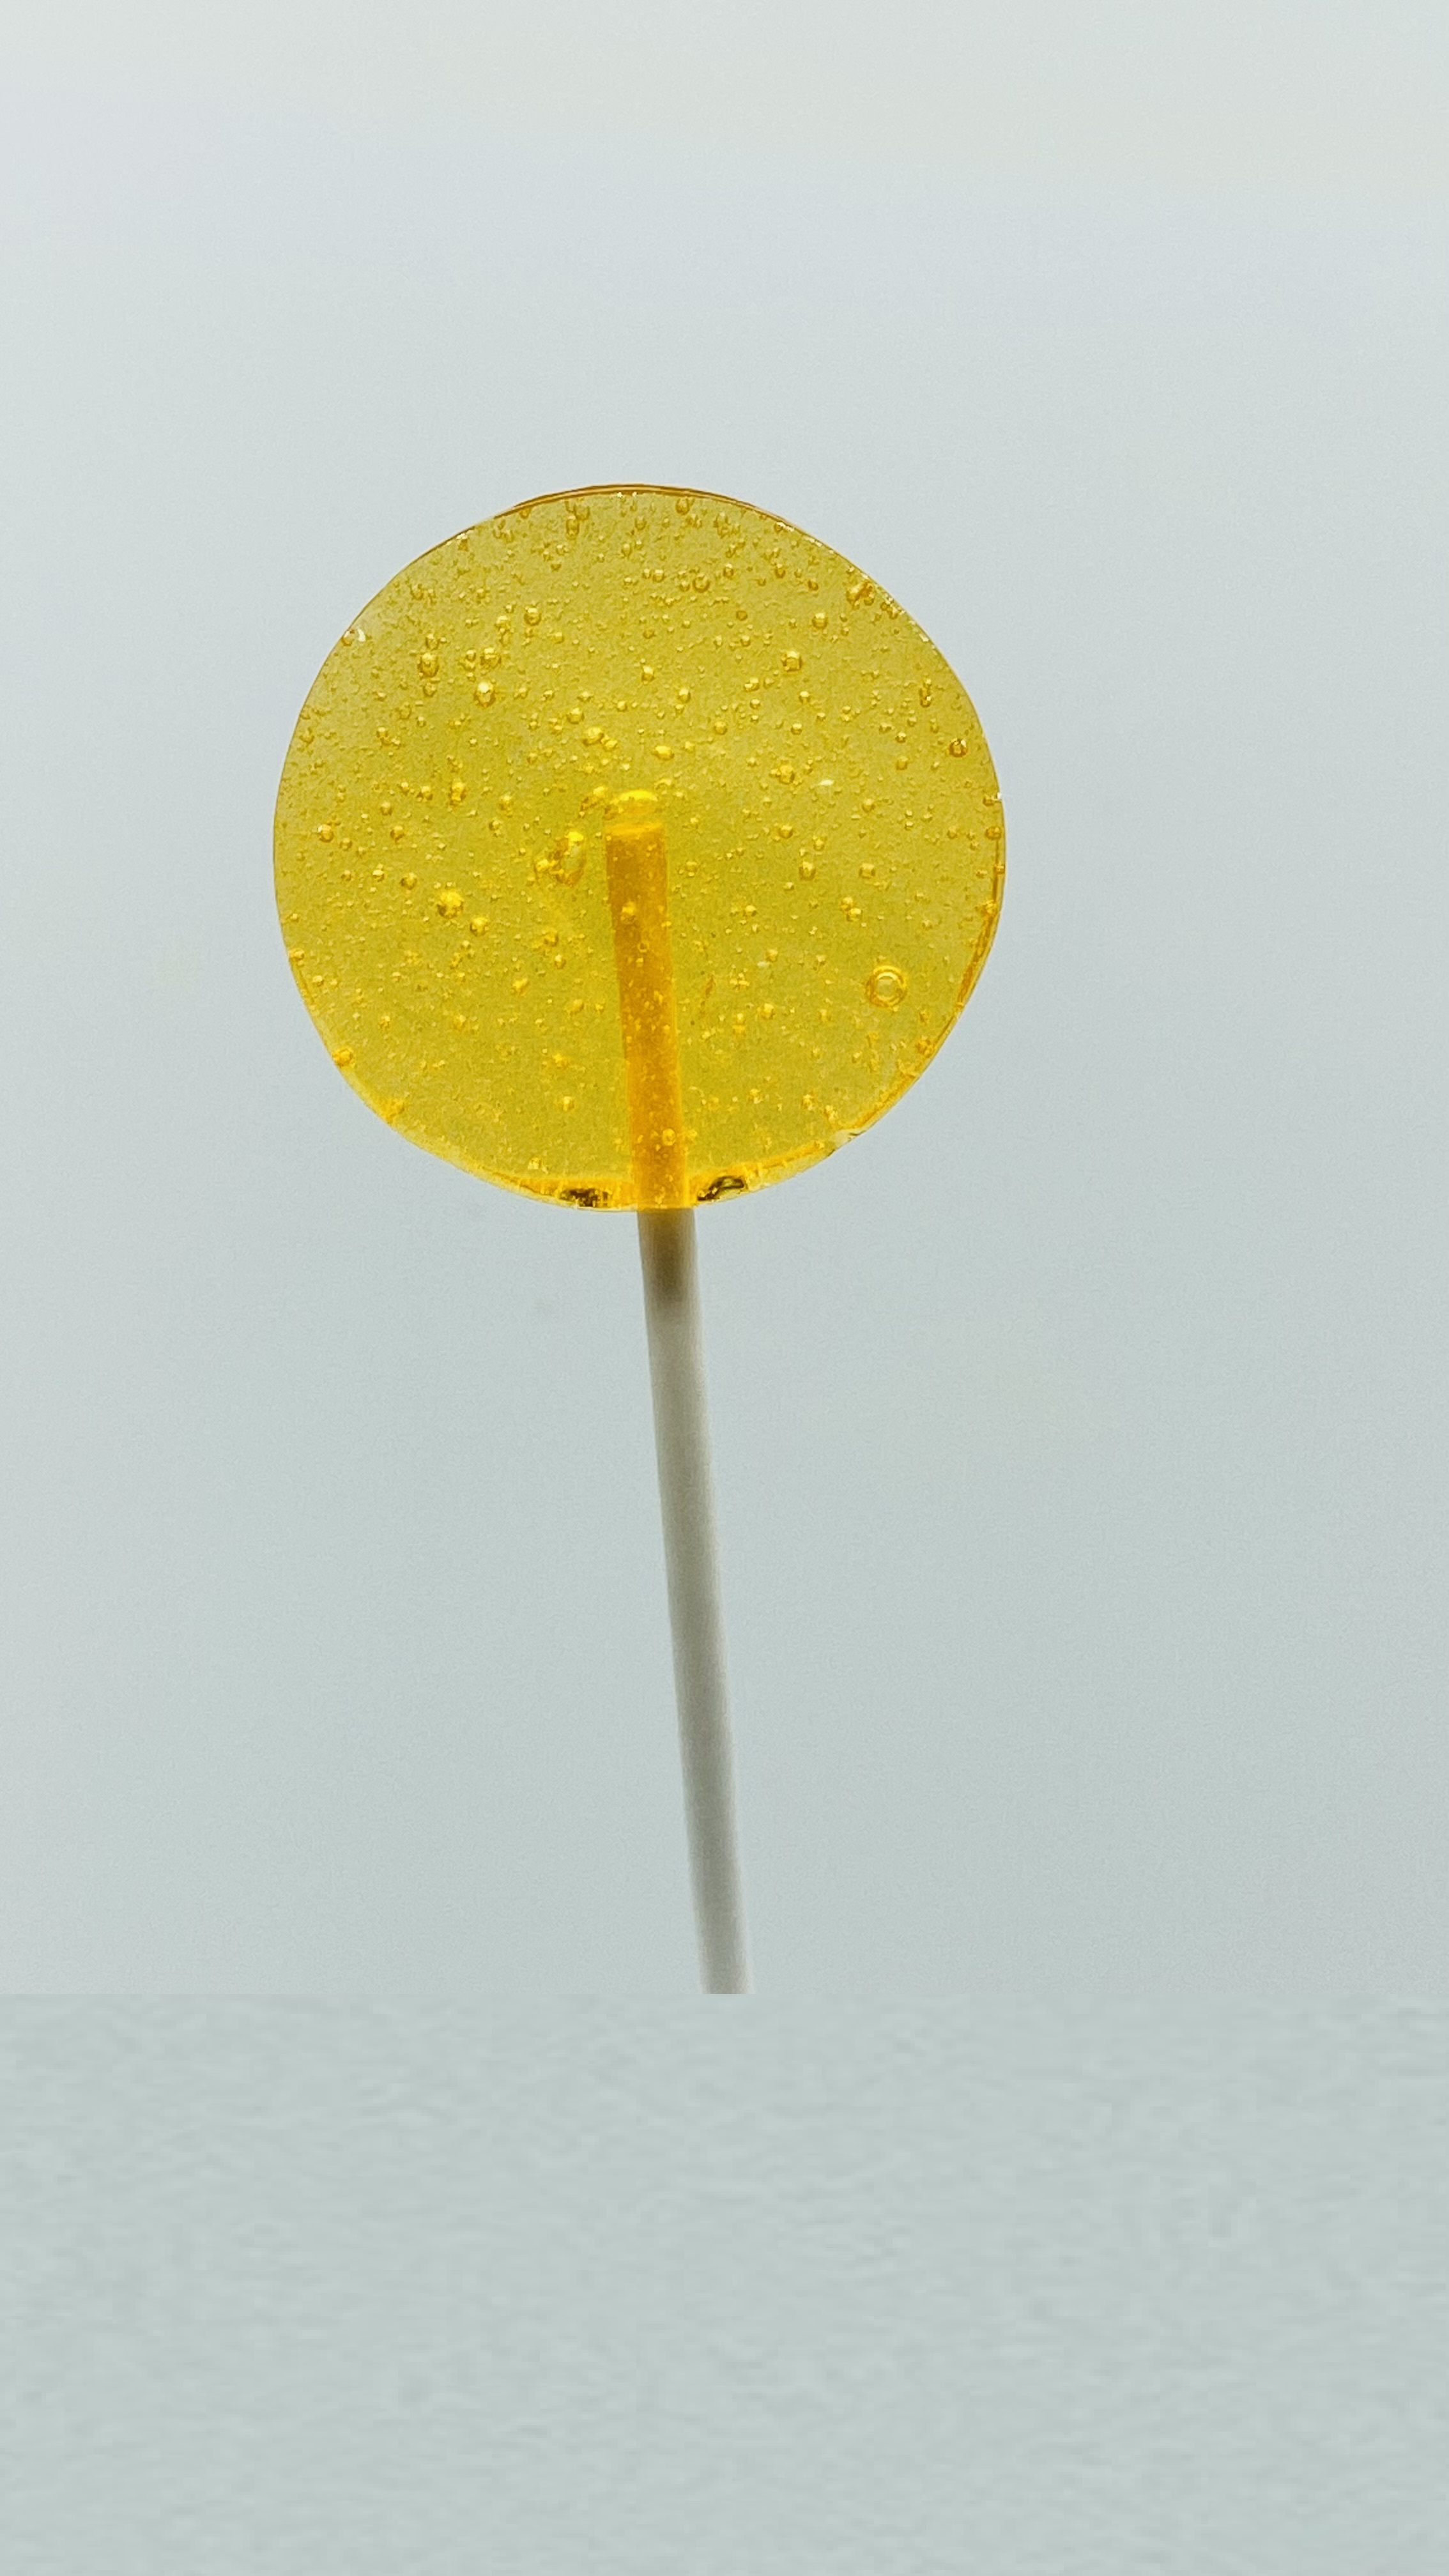 Beta Carotene yellow orange in hard boiled candy